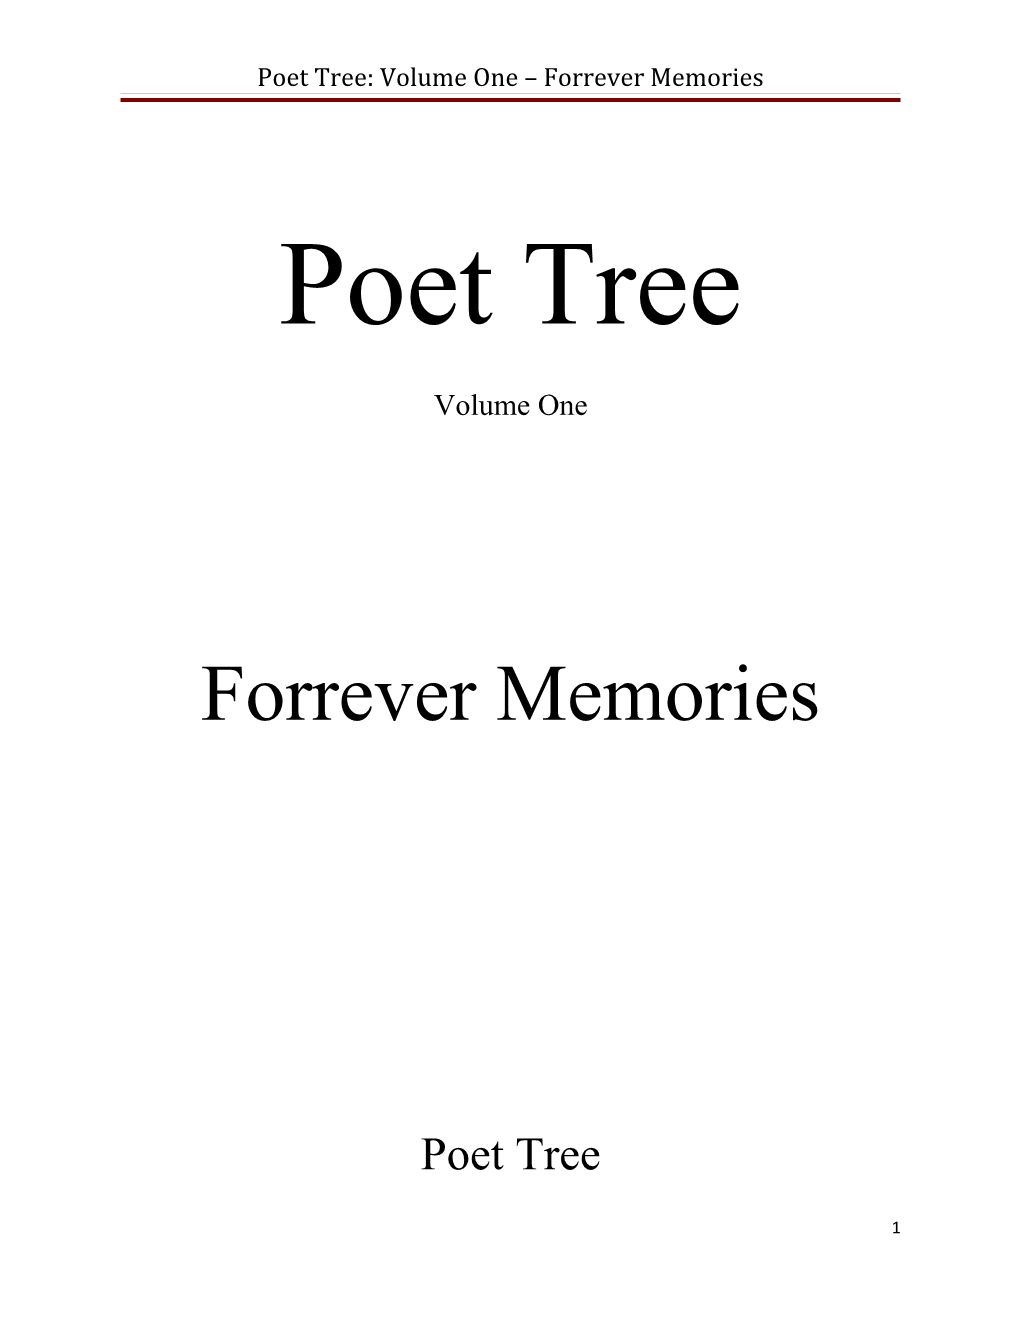 Poet Tree Volume One: Forrever Memories